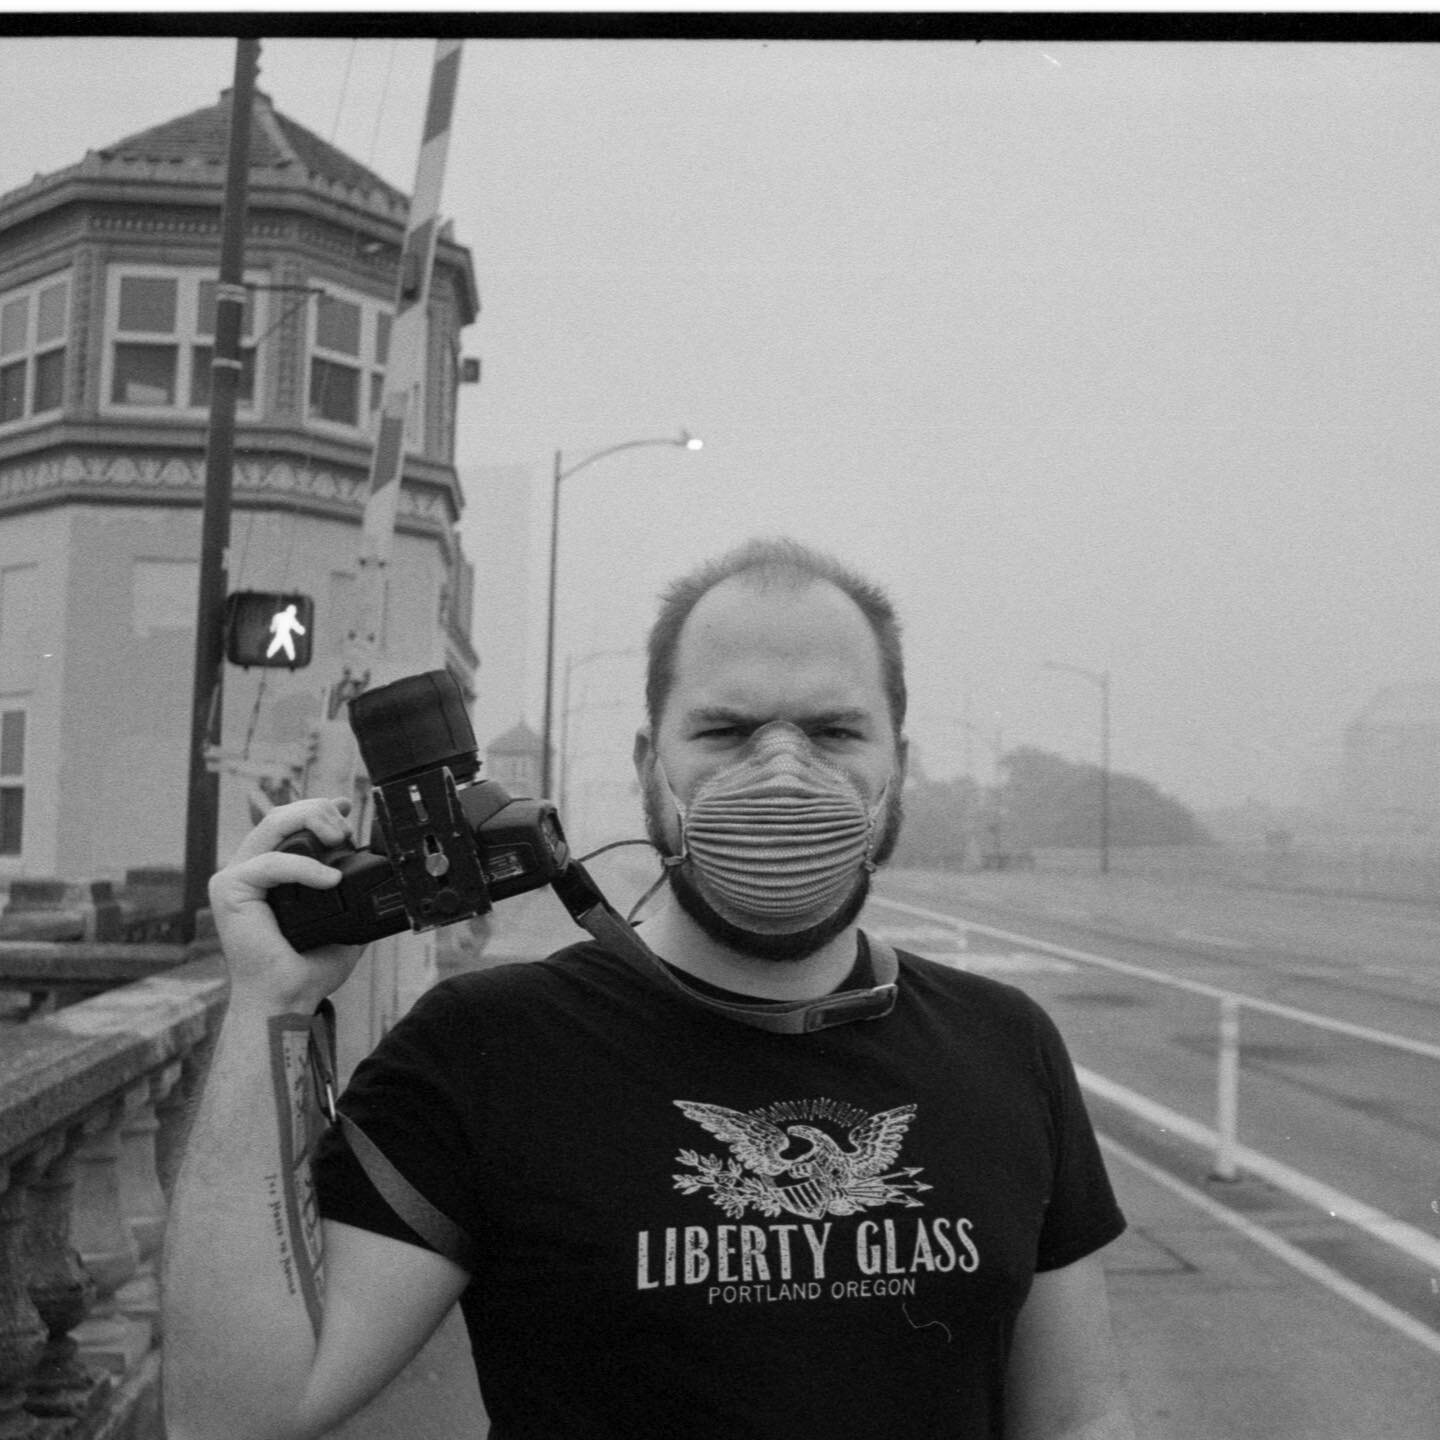 Smokey days on the Burnside Bridge. #broll #documentary #ilfordhp5 #pdx